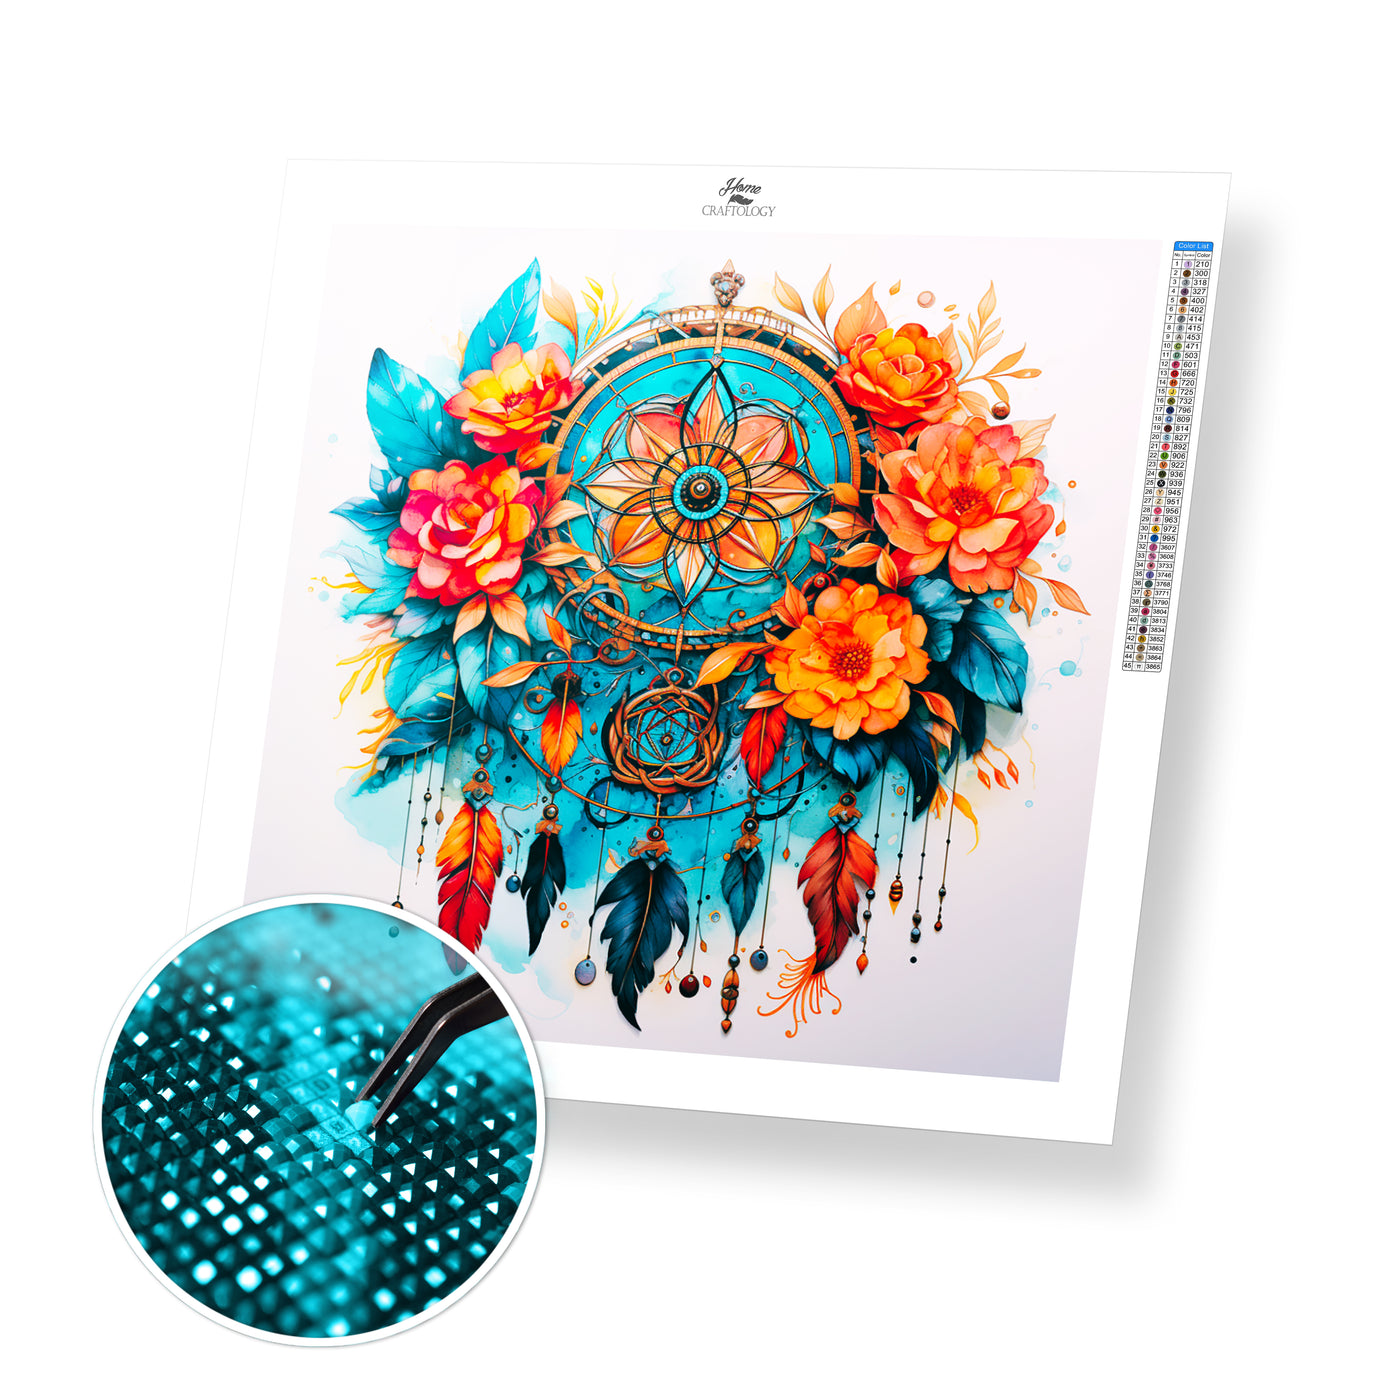 New! Dreamcatcher and Orange Flowers - Premium Diamond Painting Kit